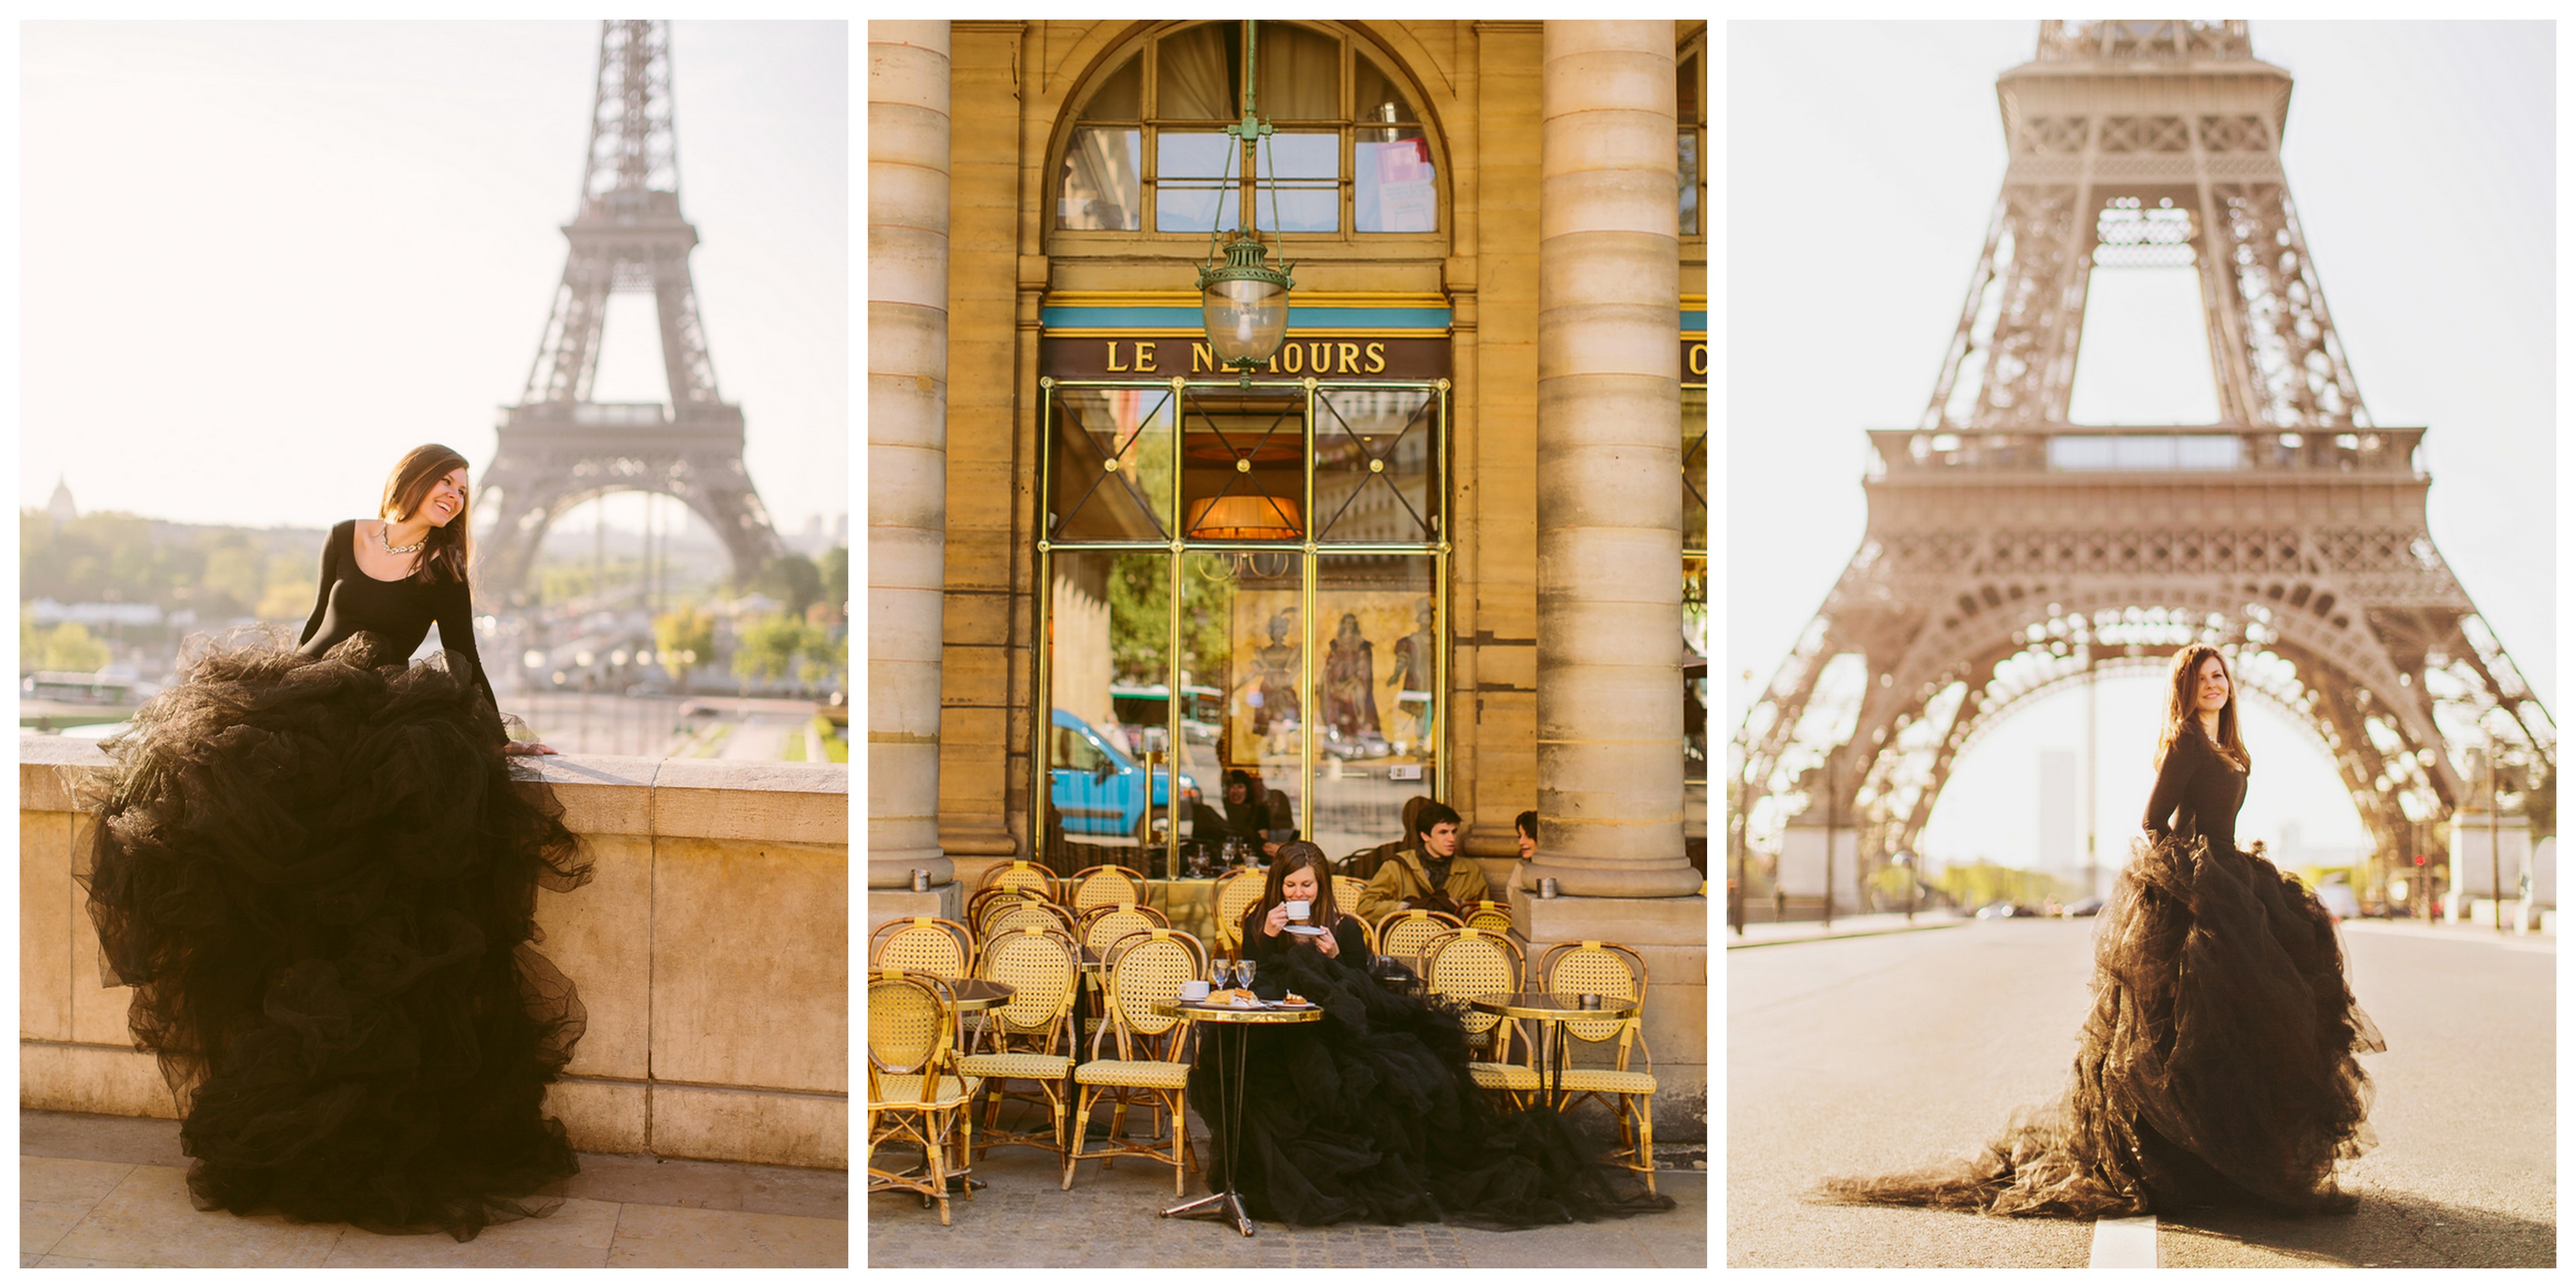 {Aspiring Kennedy photos by L'Amour de Paris}